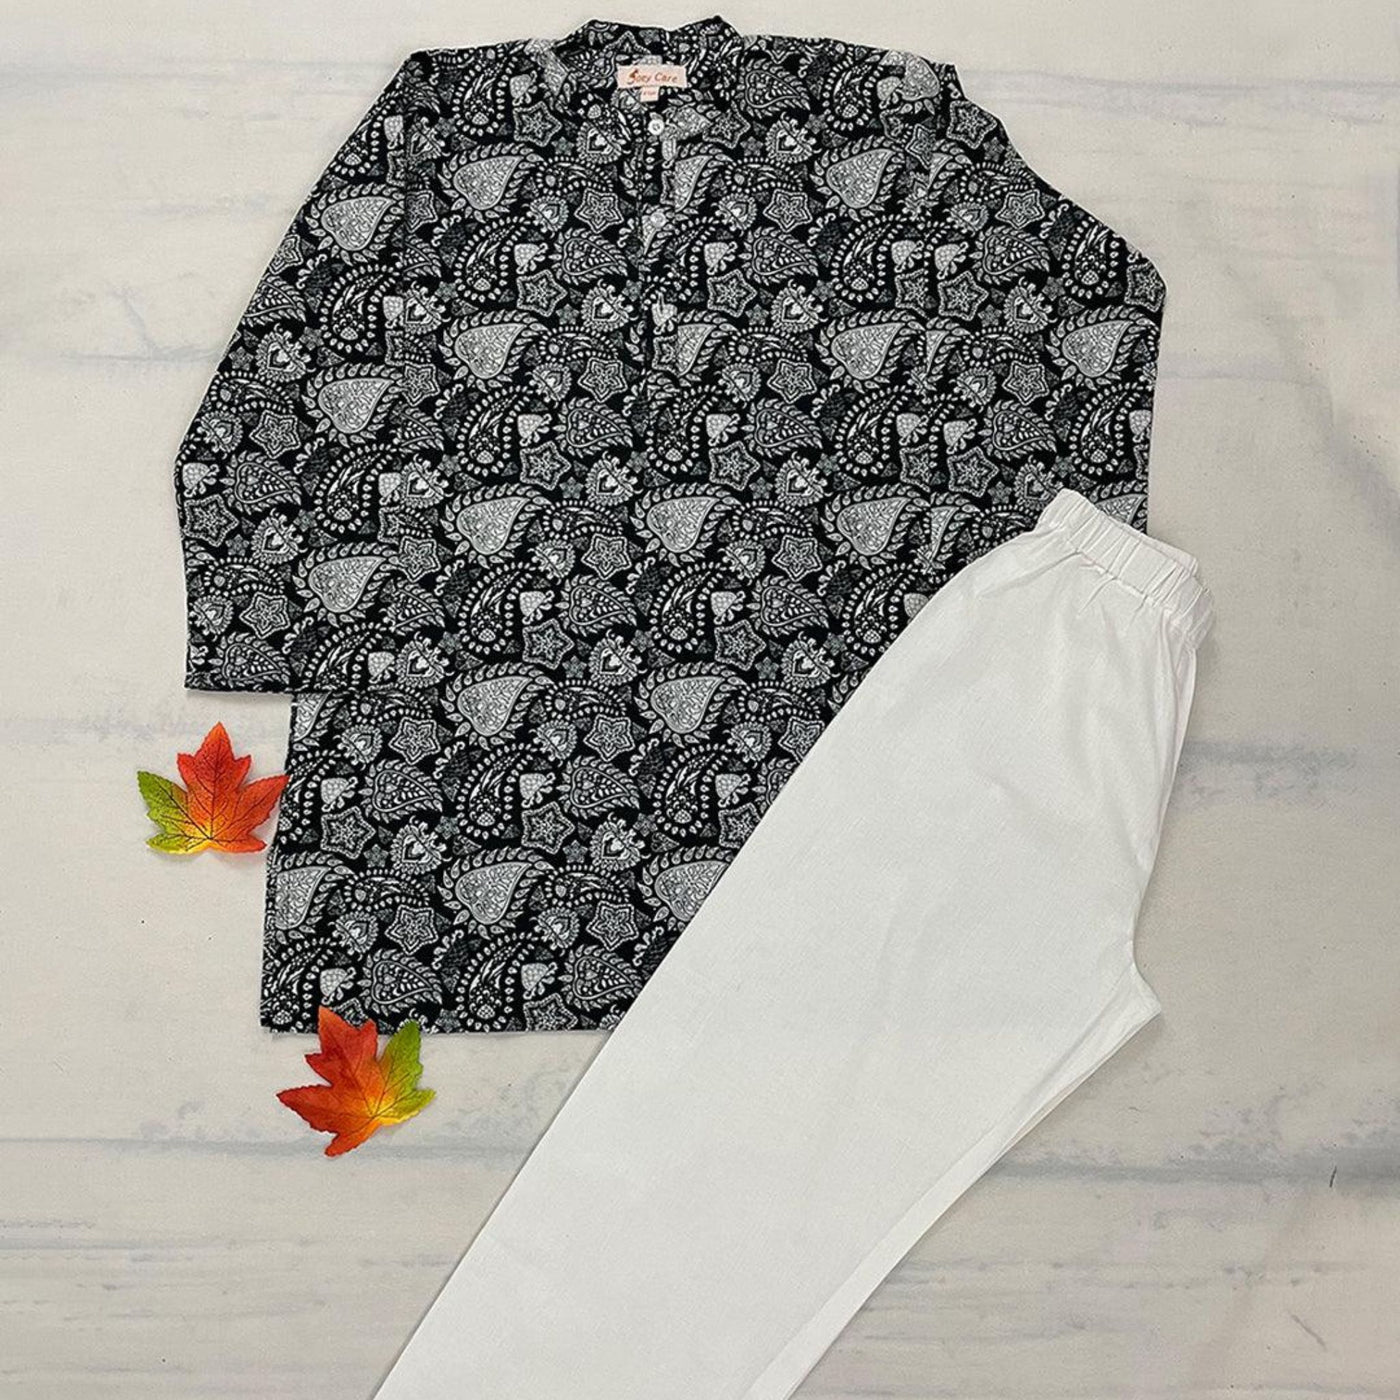 Pajama set for boys and girls - Floral Black Joeycare